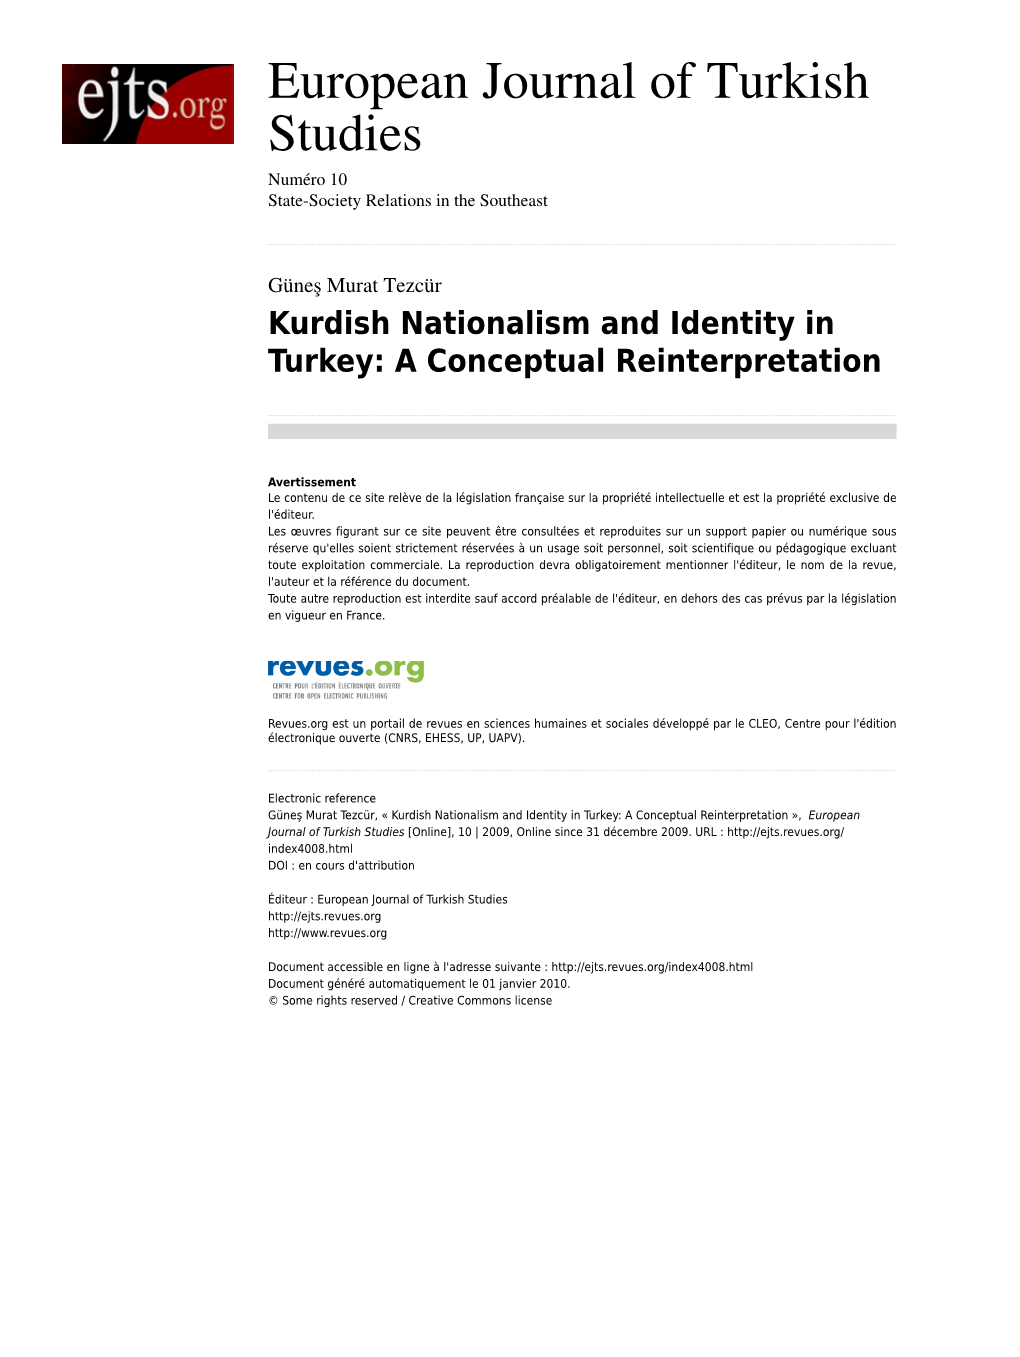 Kurdish Nationalism and Identity in Turkey: a Conceptual Reinterpretation